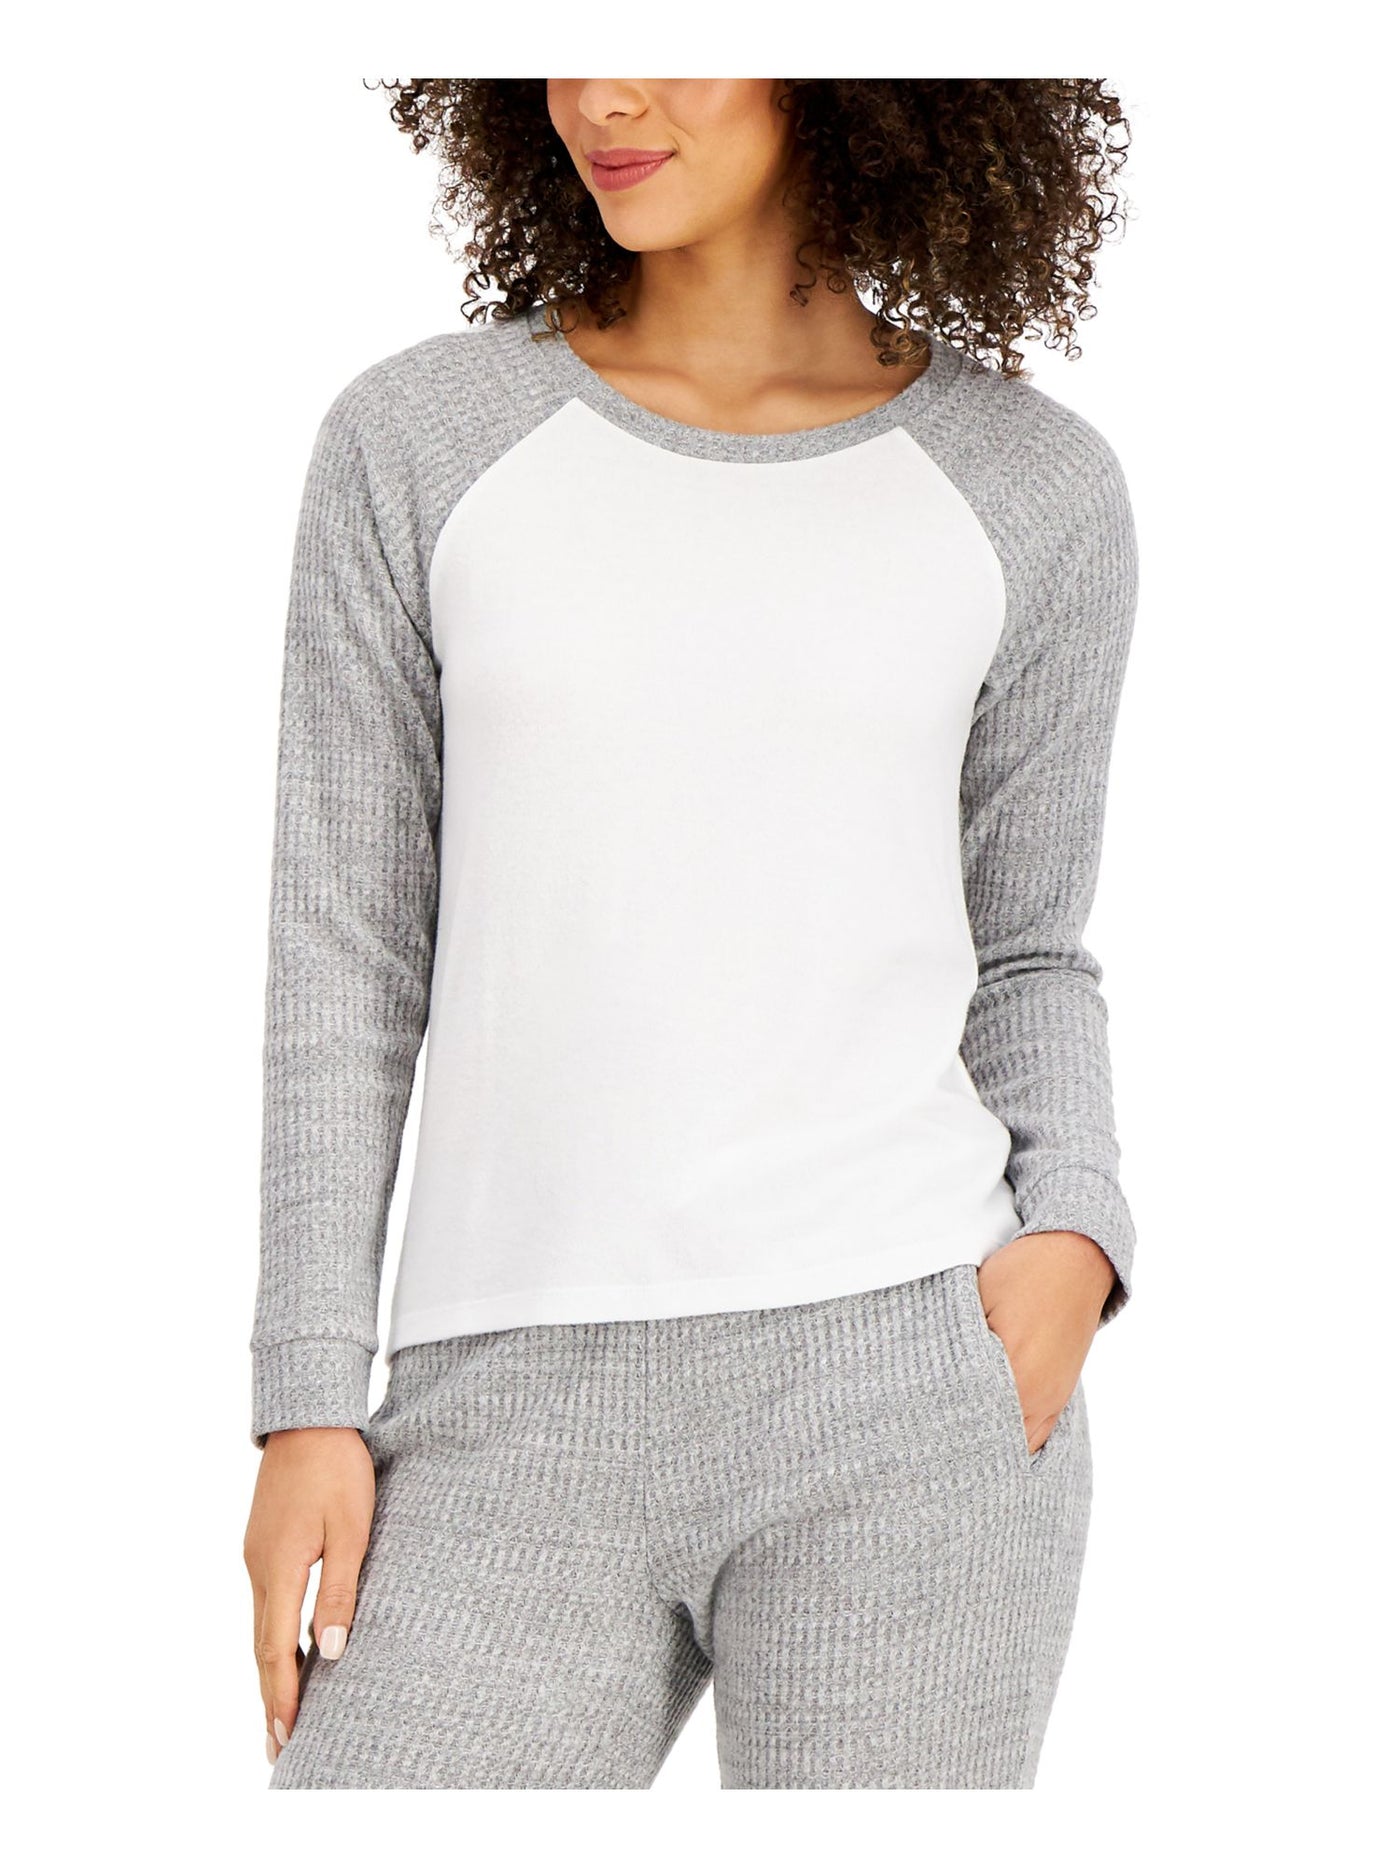 ALFANI Intimates Gray Sleep Shirt Pajama Top XXL